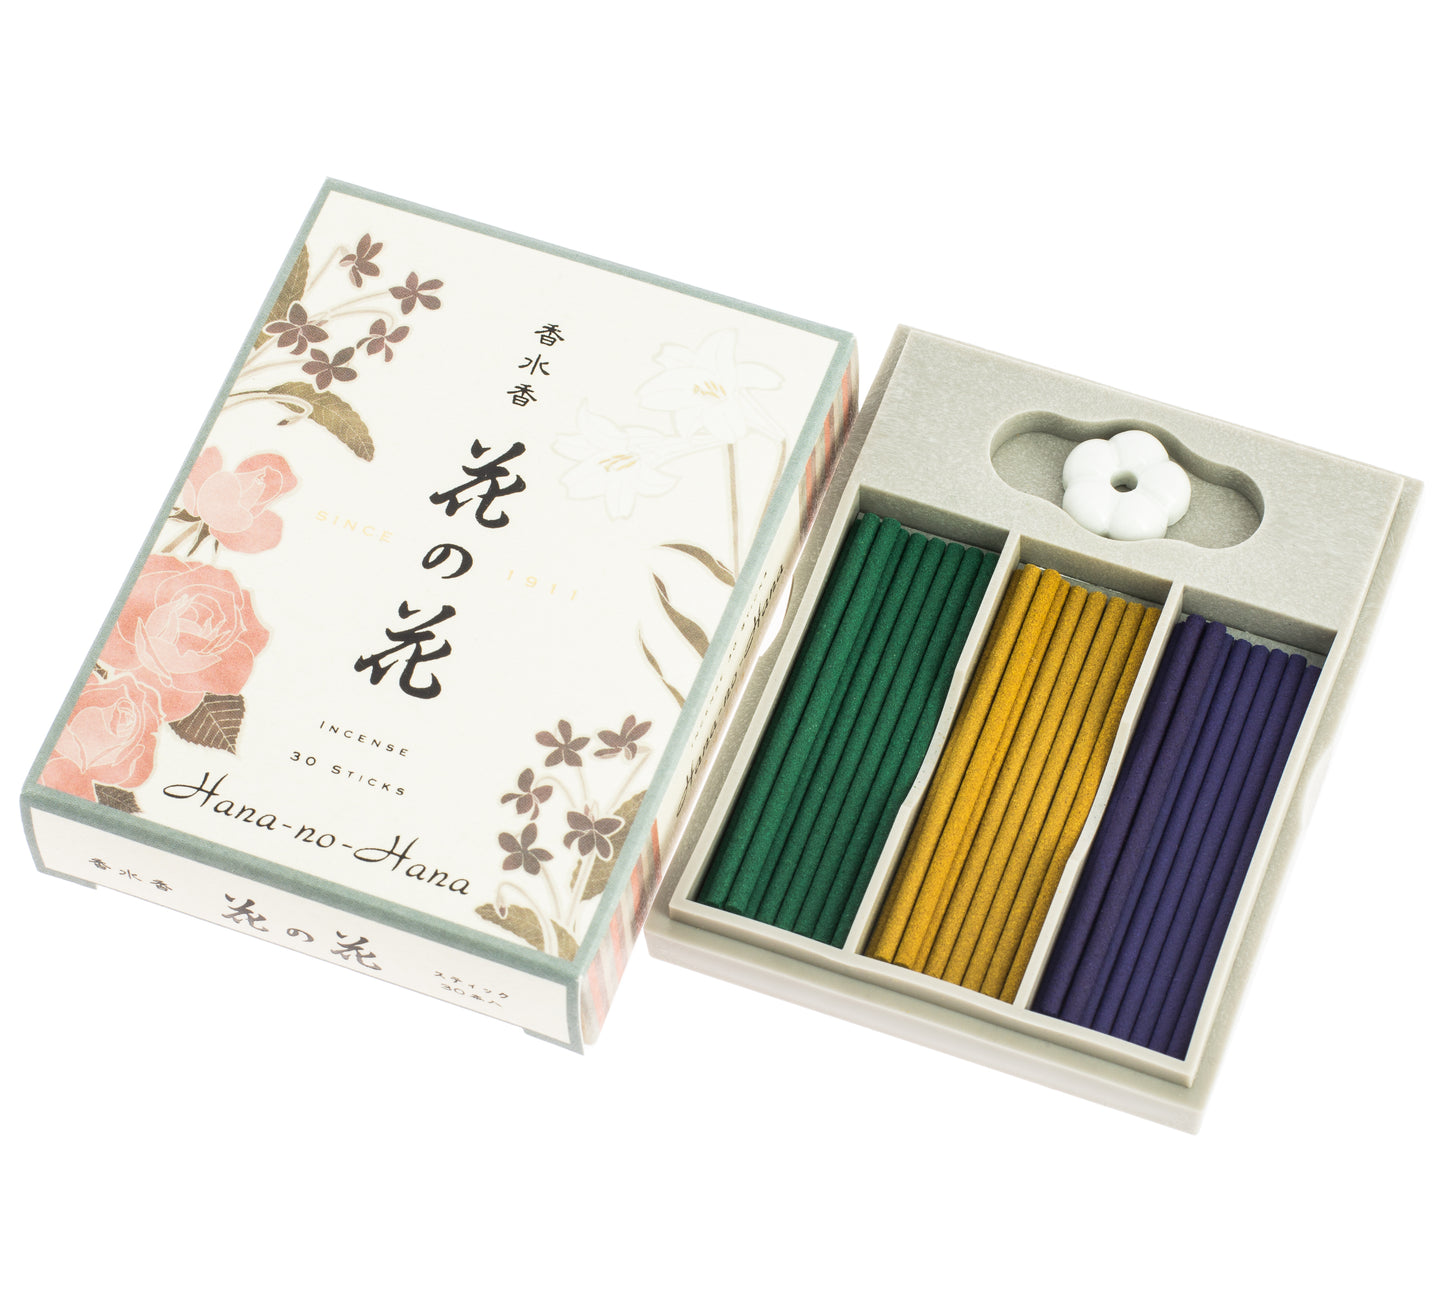 Hana no Hana Incense - 3 Flowers